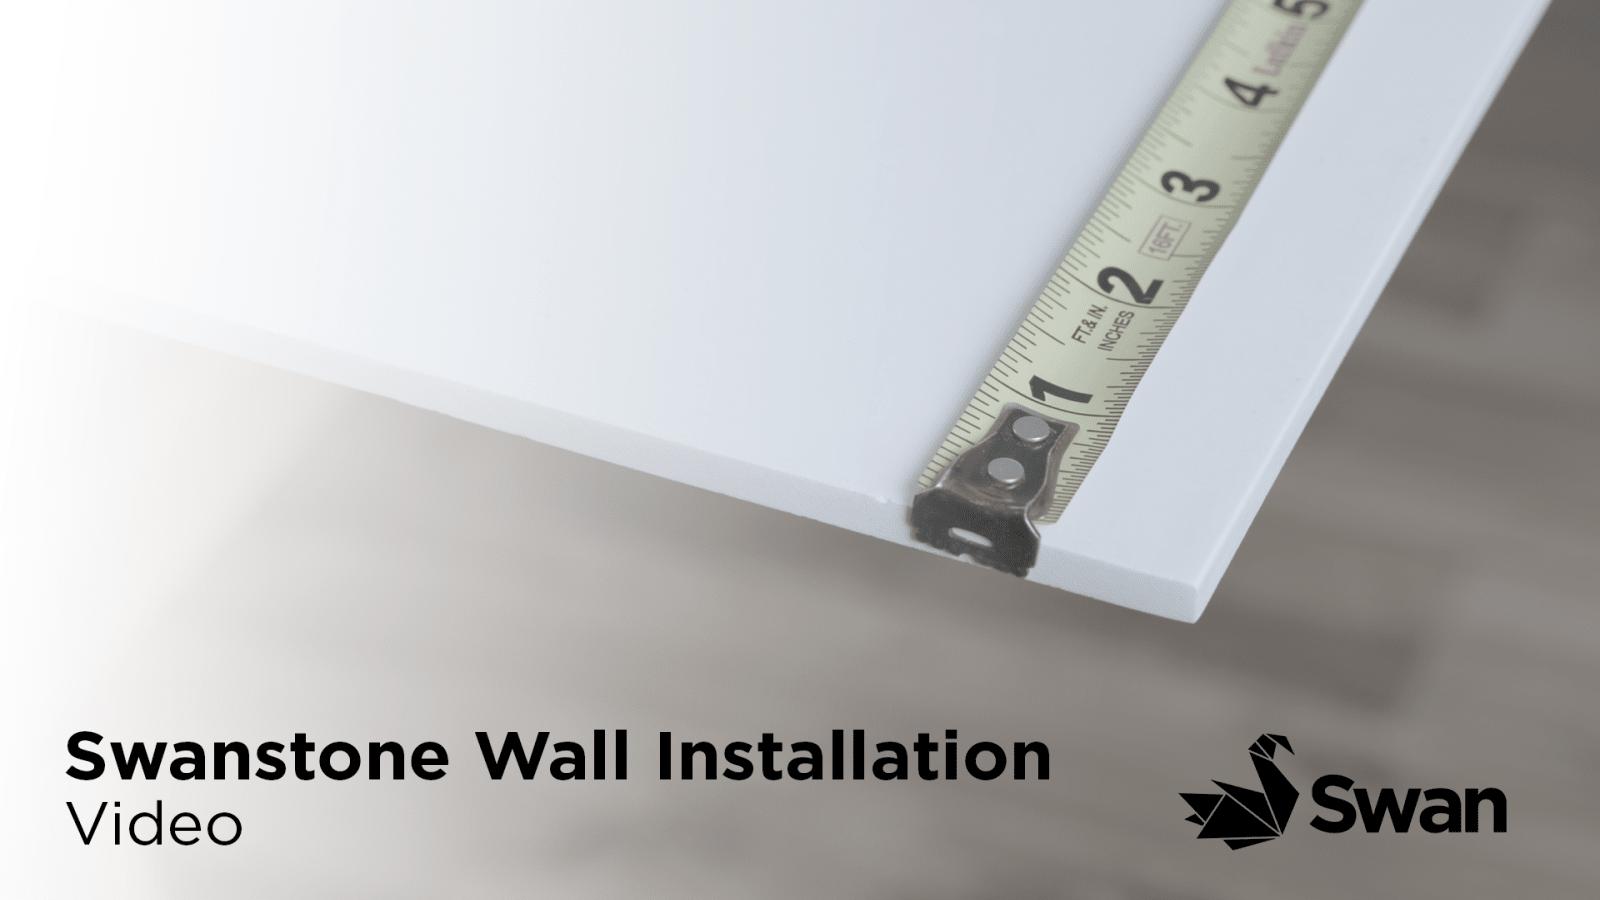 Installation Video: Swanstone Walls with Foam Tape